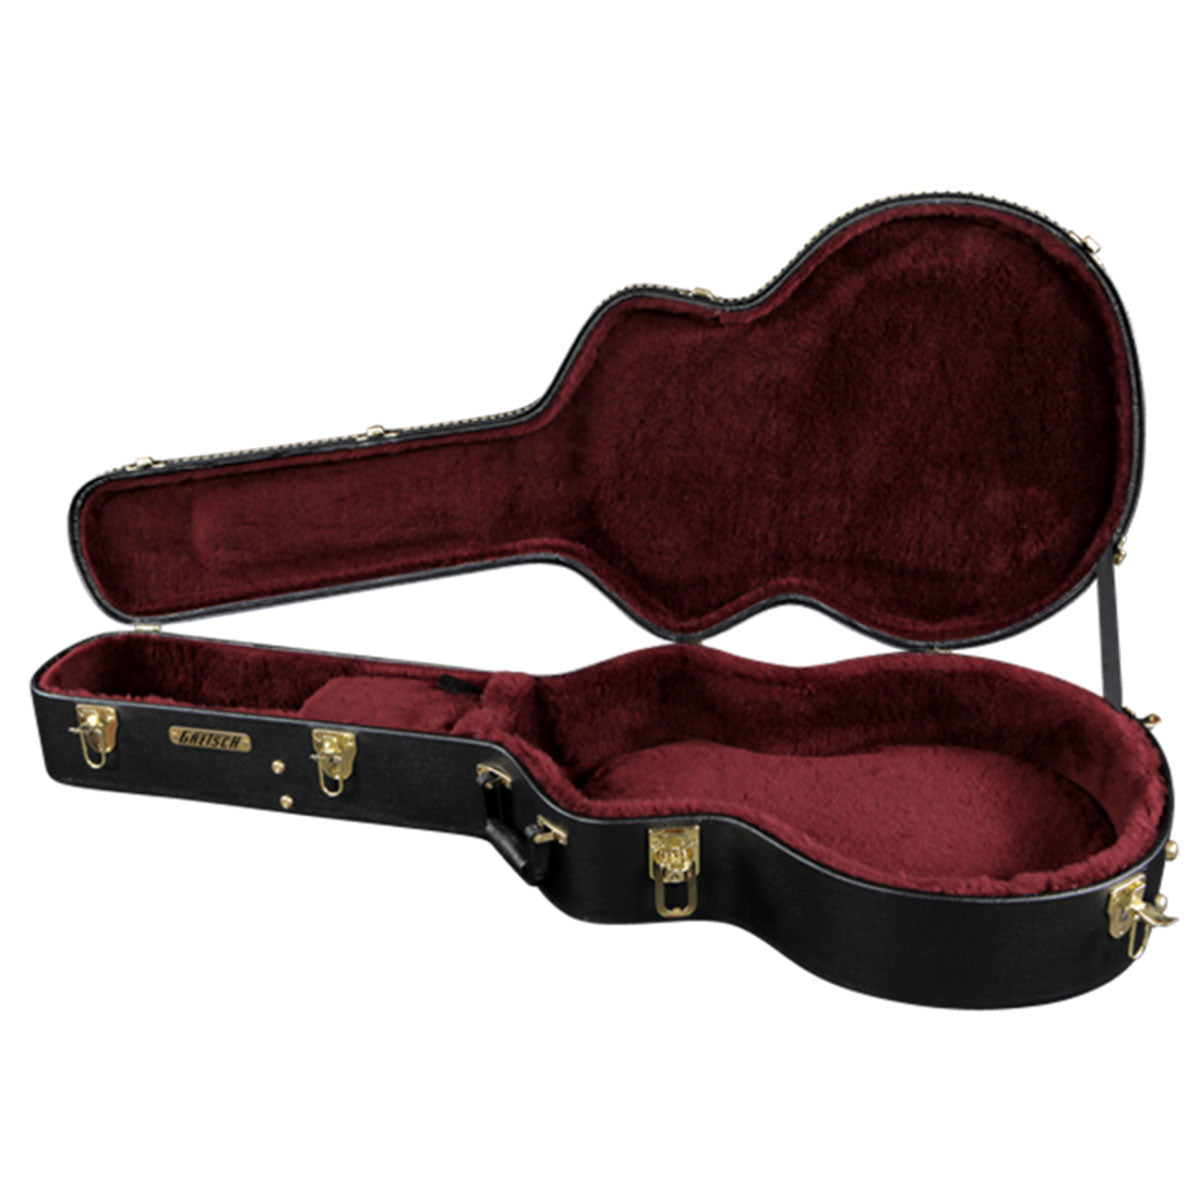 Gretsch G6241 Guitar Case for Hollow Body JR Black - 0996412000